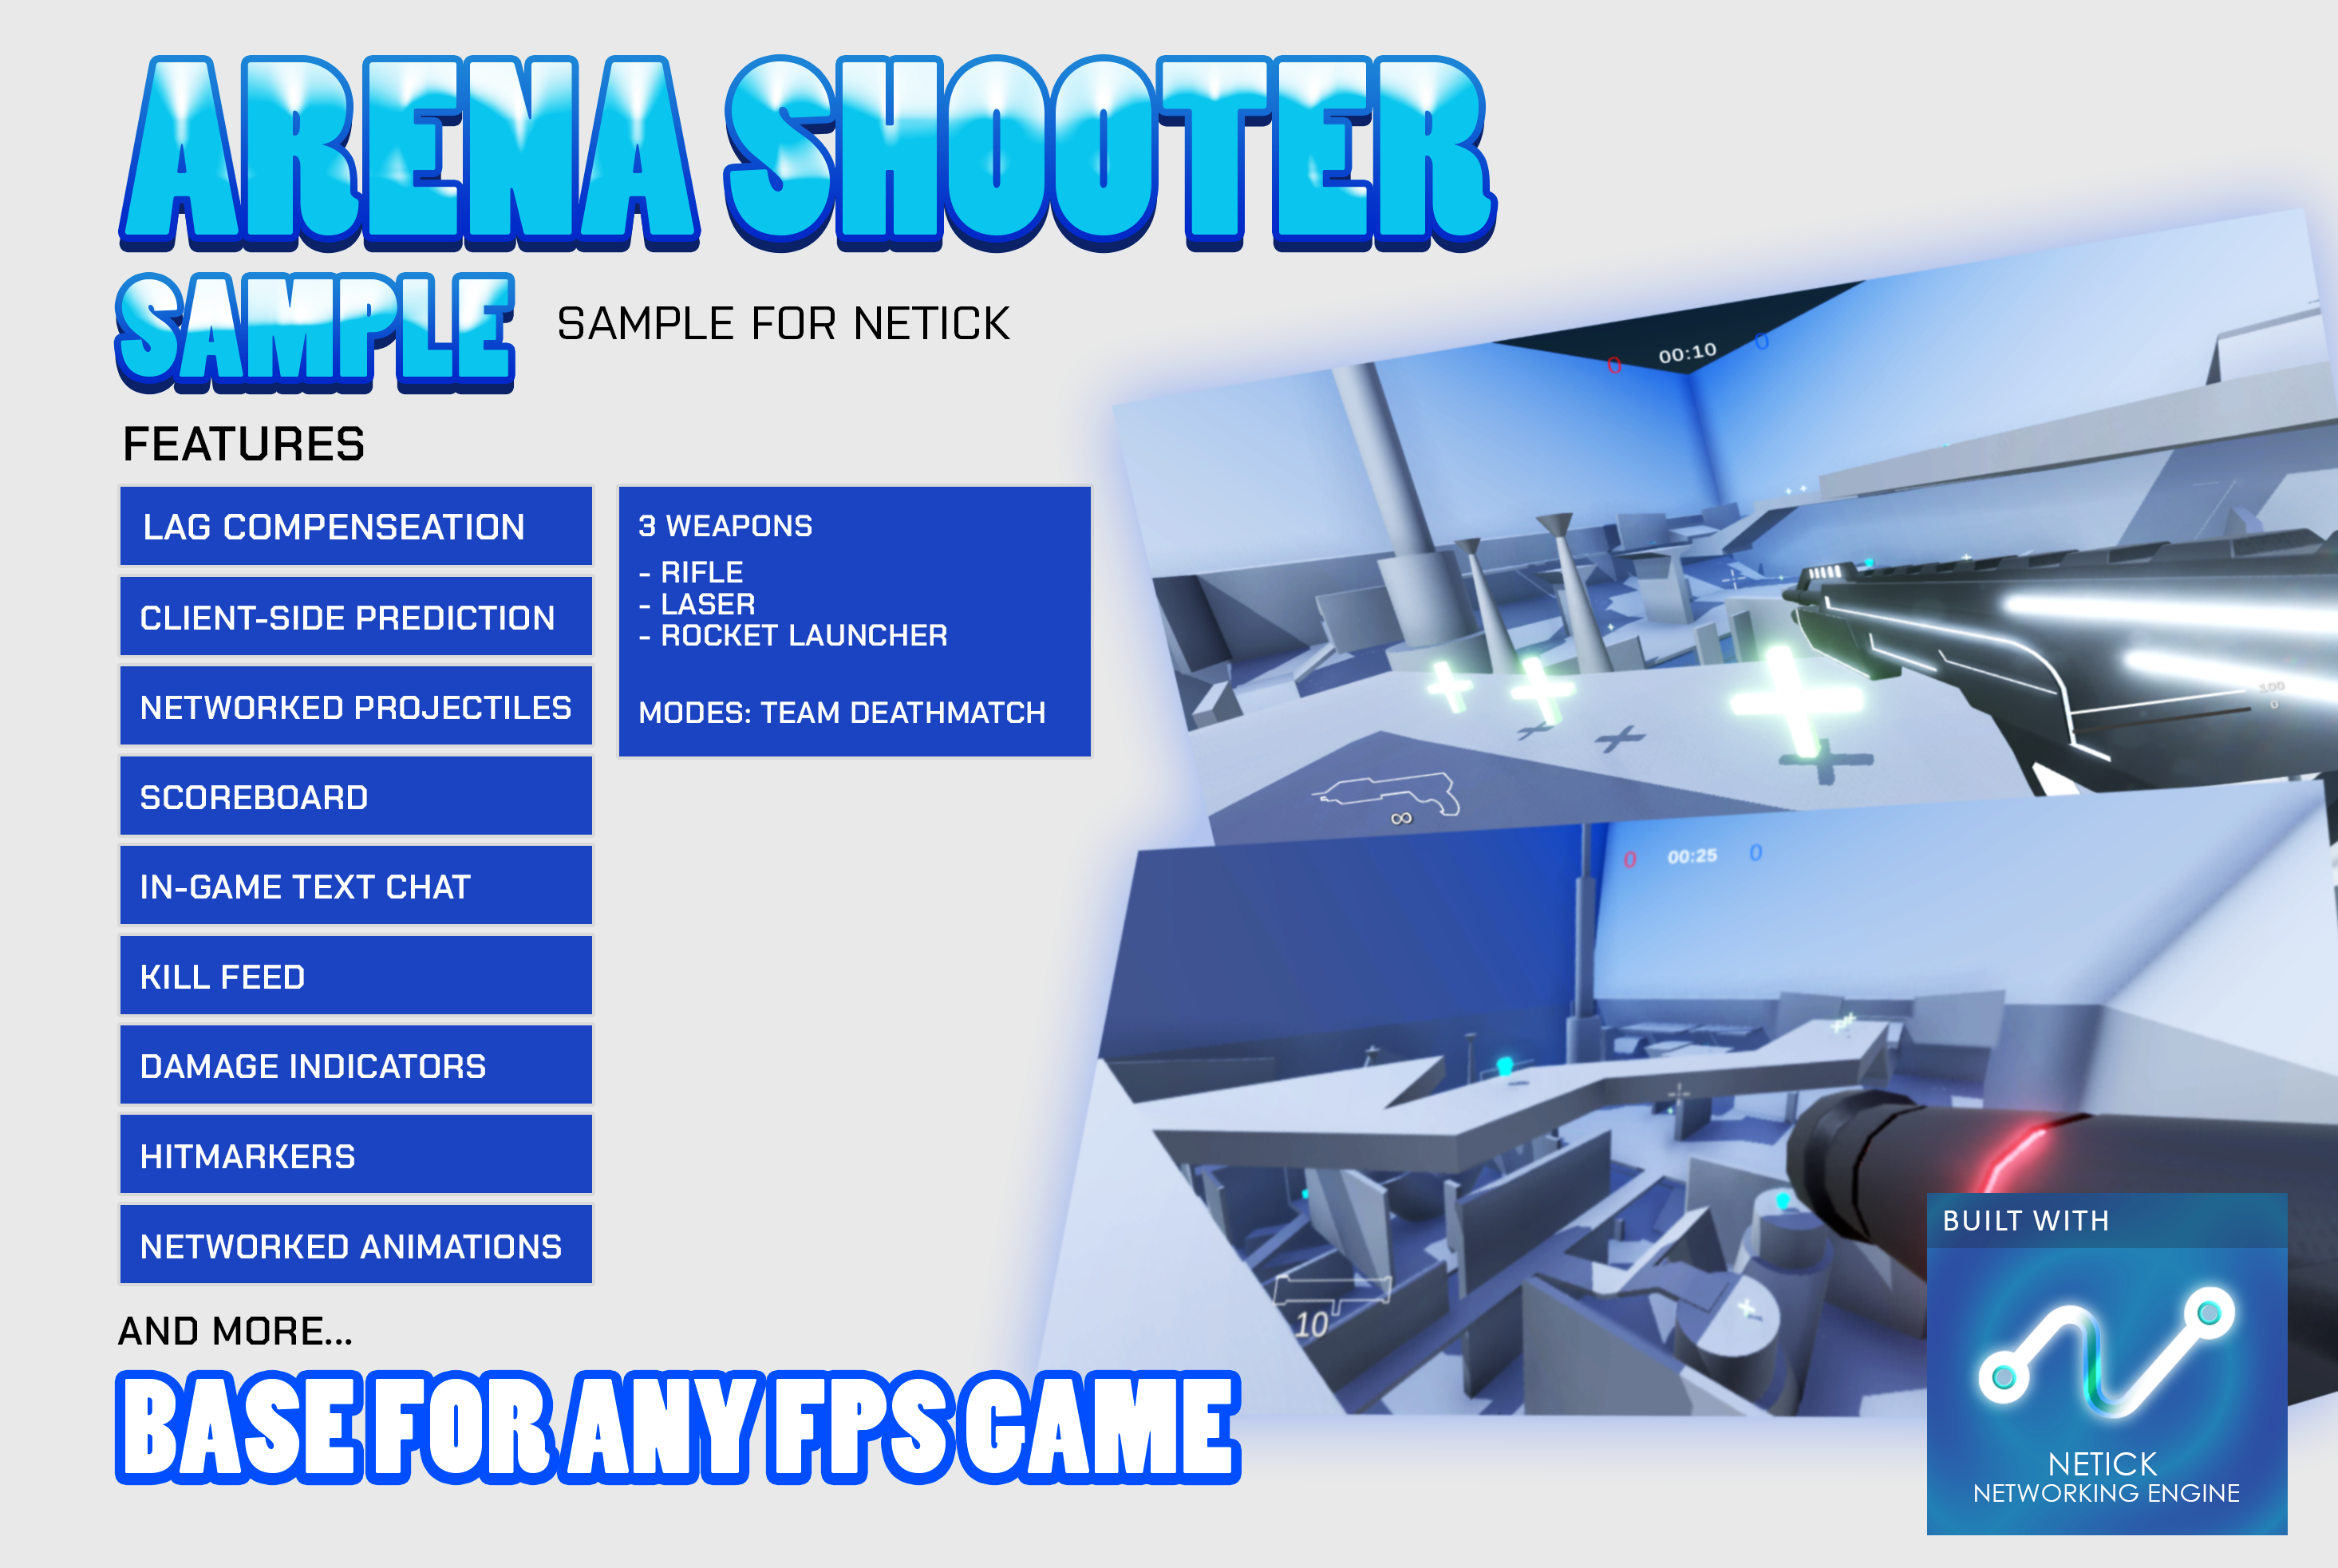 Arena Shooter Sample